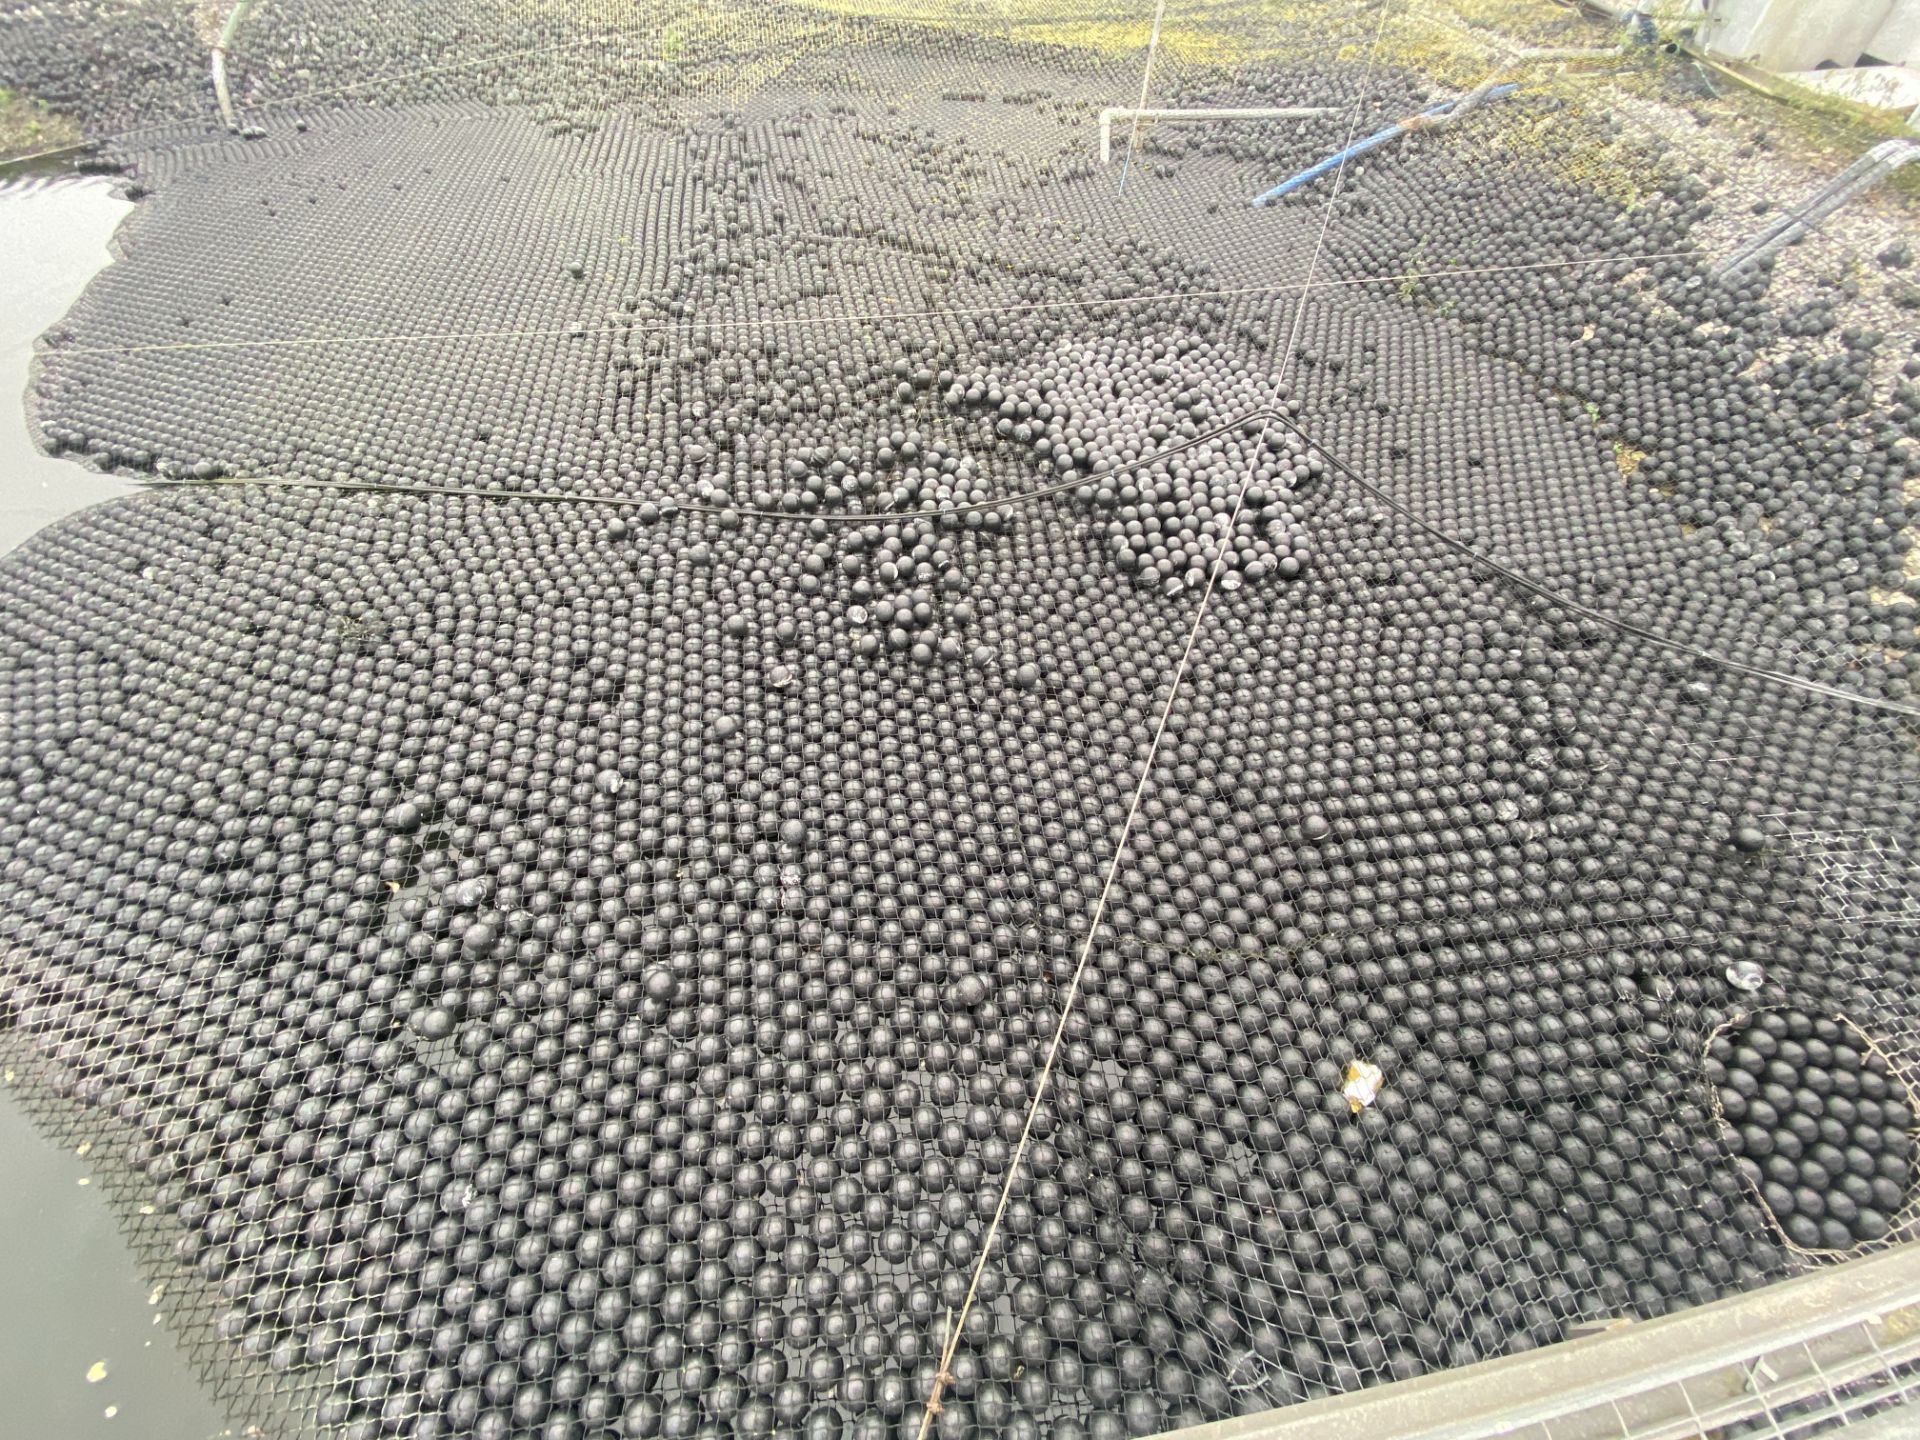 Quantity of Approx. 18,000 Evaporation Shade Balls. Lot located Bretherton, Lancashire. Lot loaded